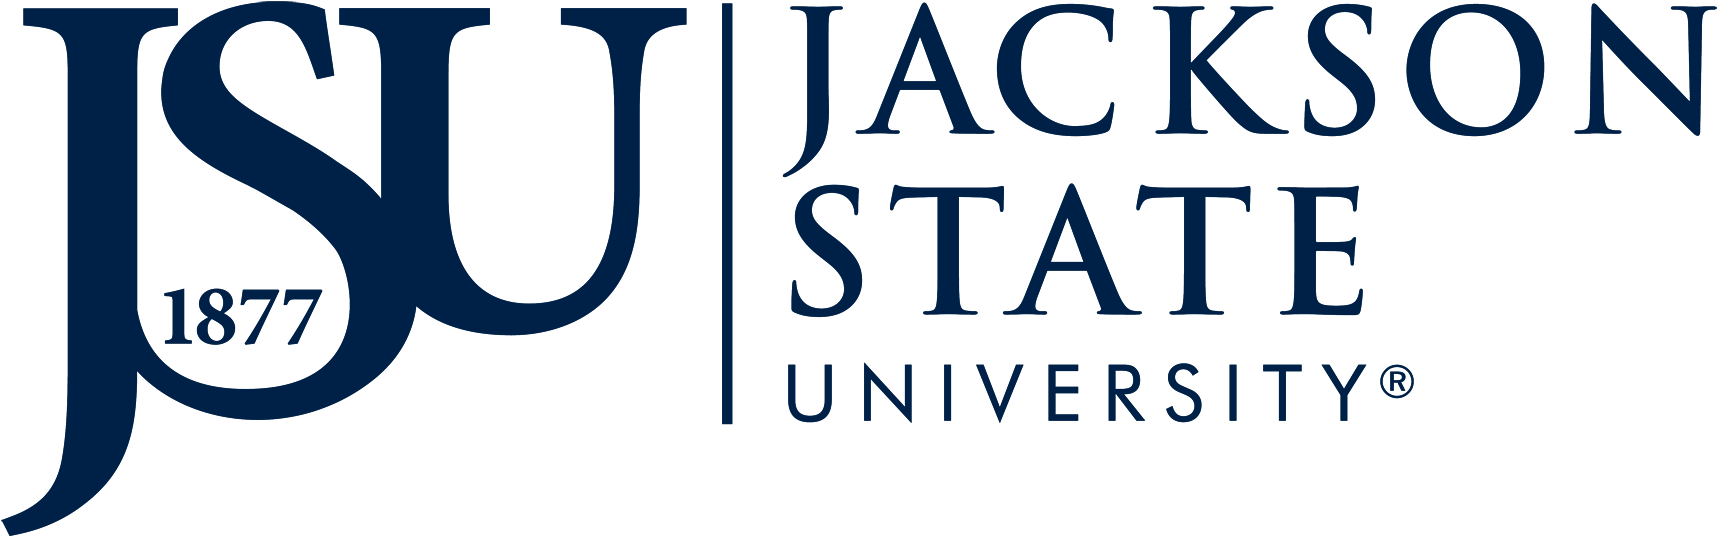 Jackson State University - Jackson State University (1800x600)